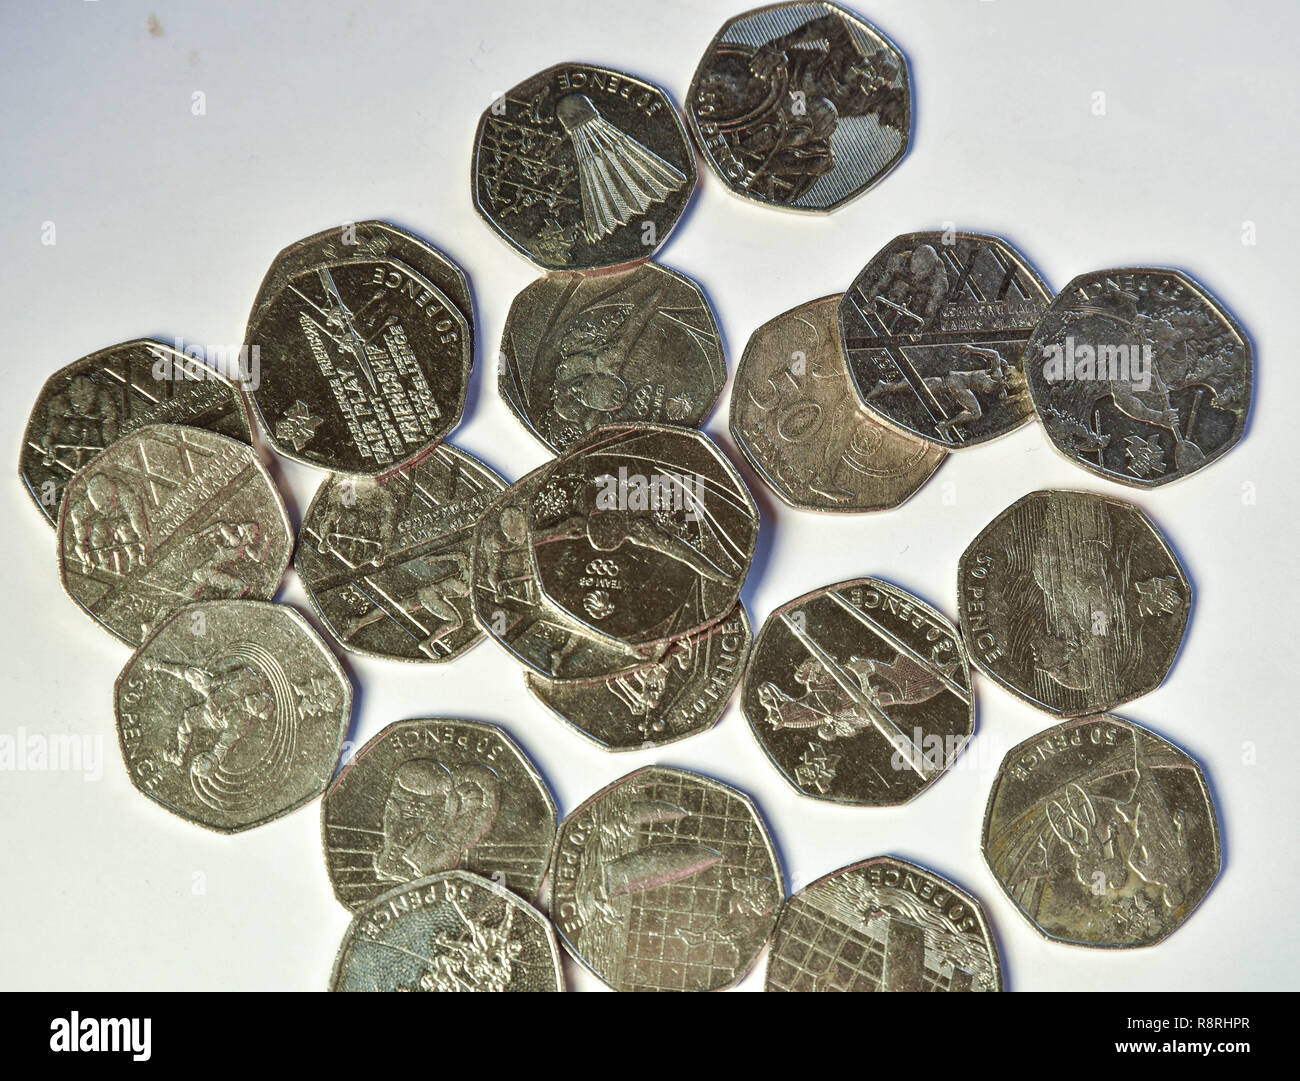 Uk 50p monete per celebrare le Olimpiadi Foto Stock